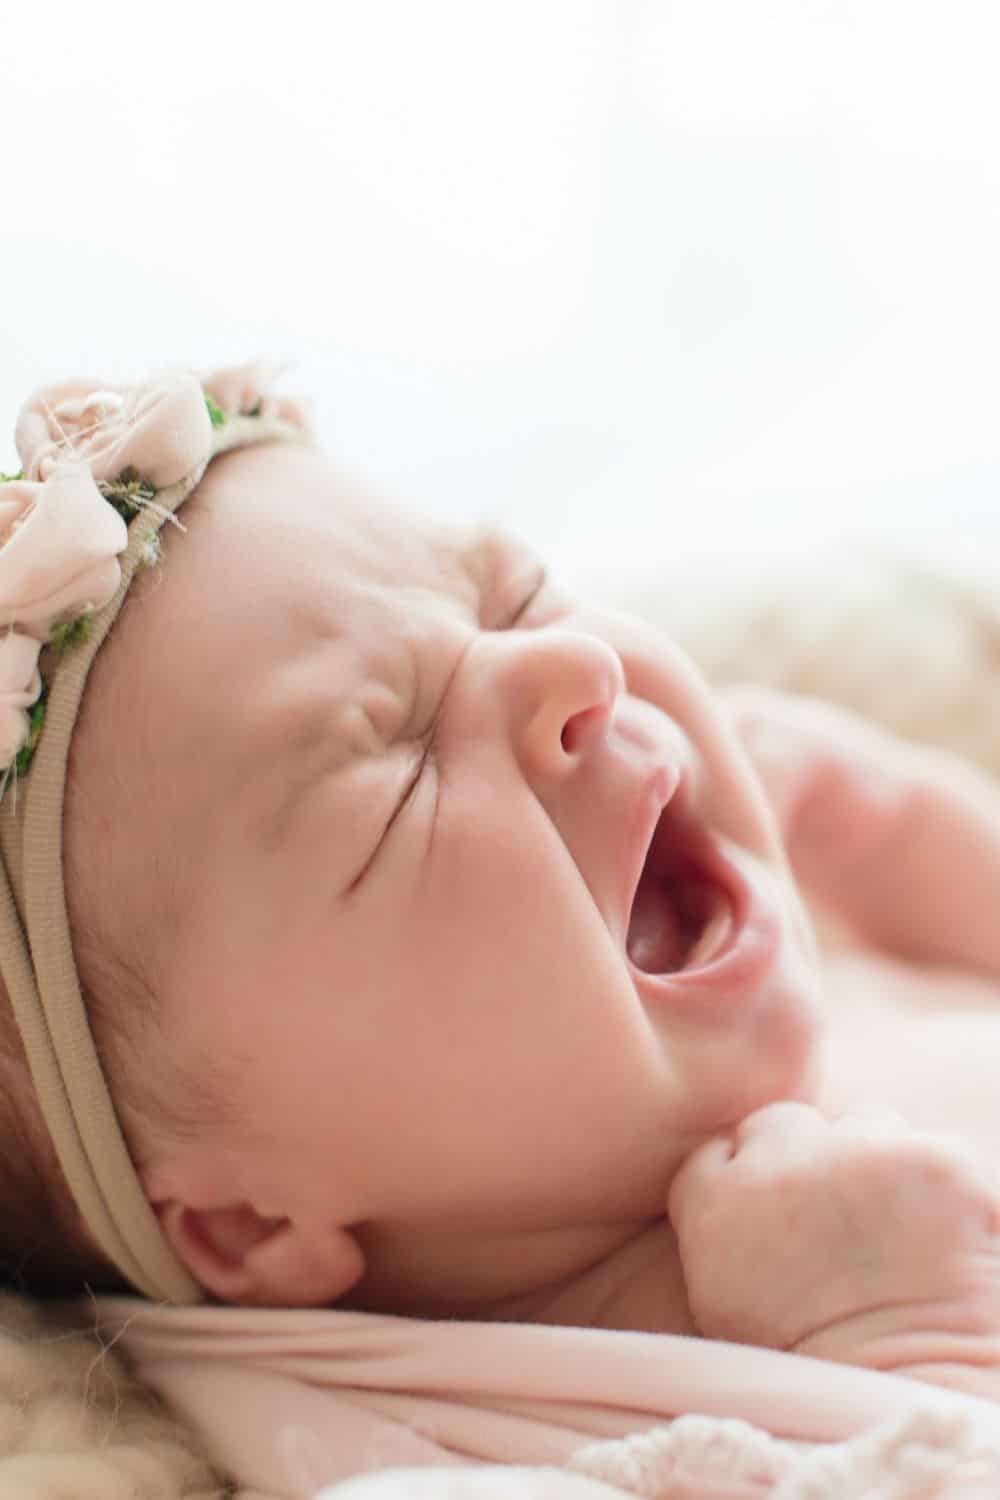 Baby with headband yawning.